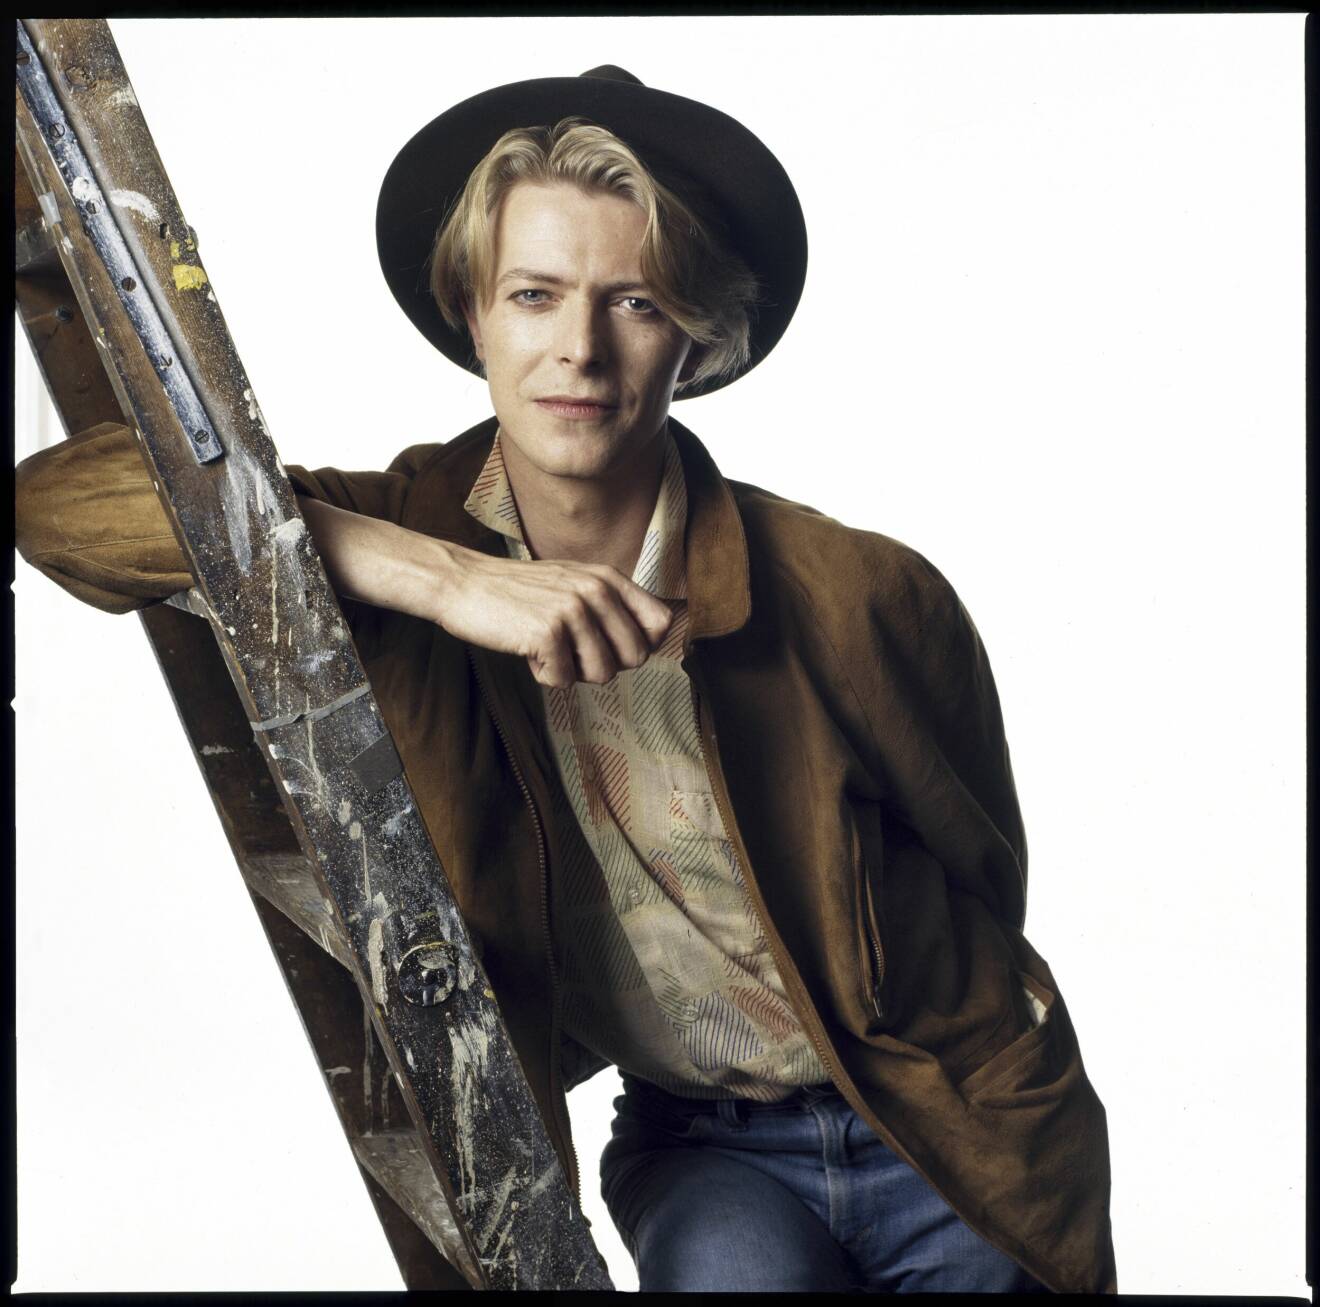 David Bowie fotad av David Bailey.